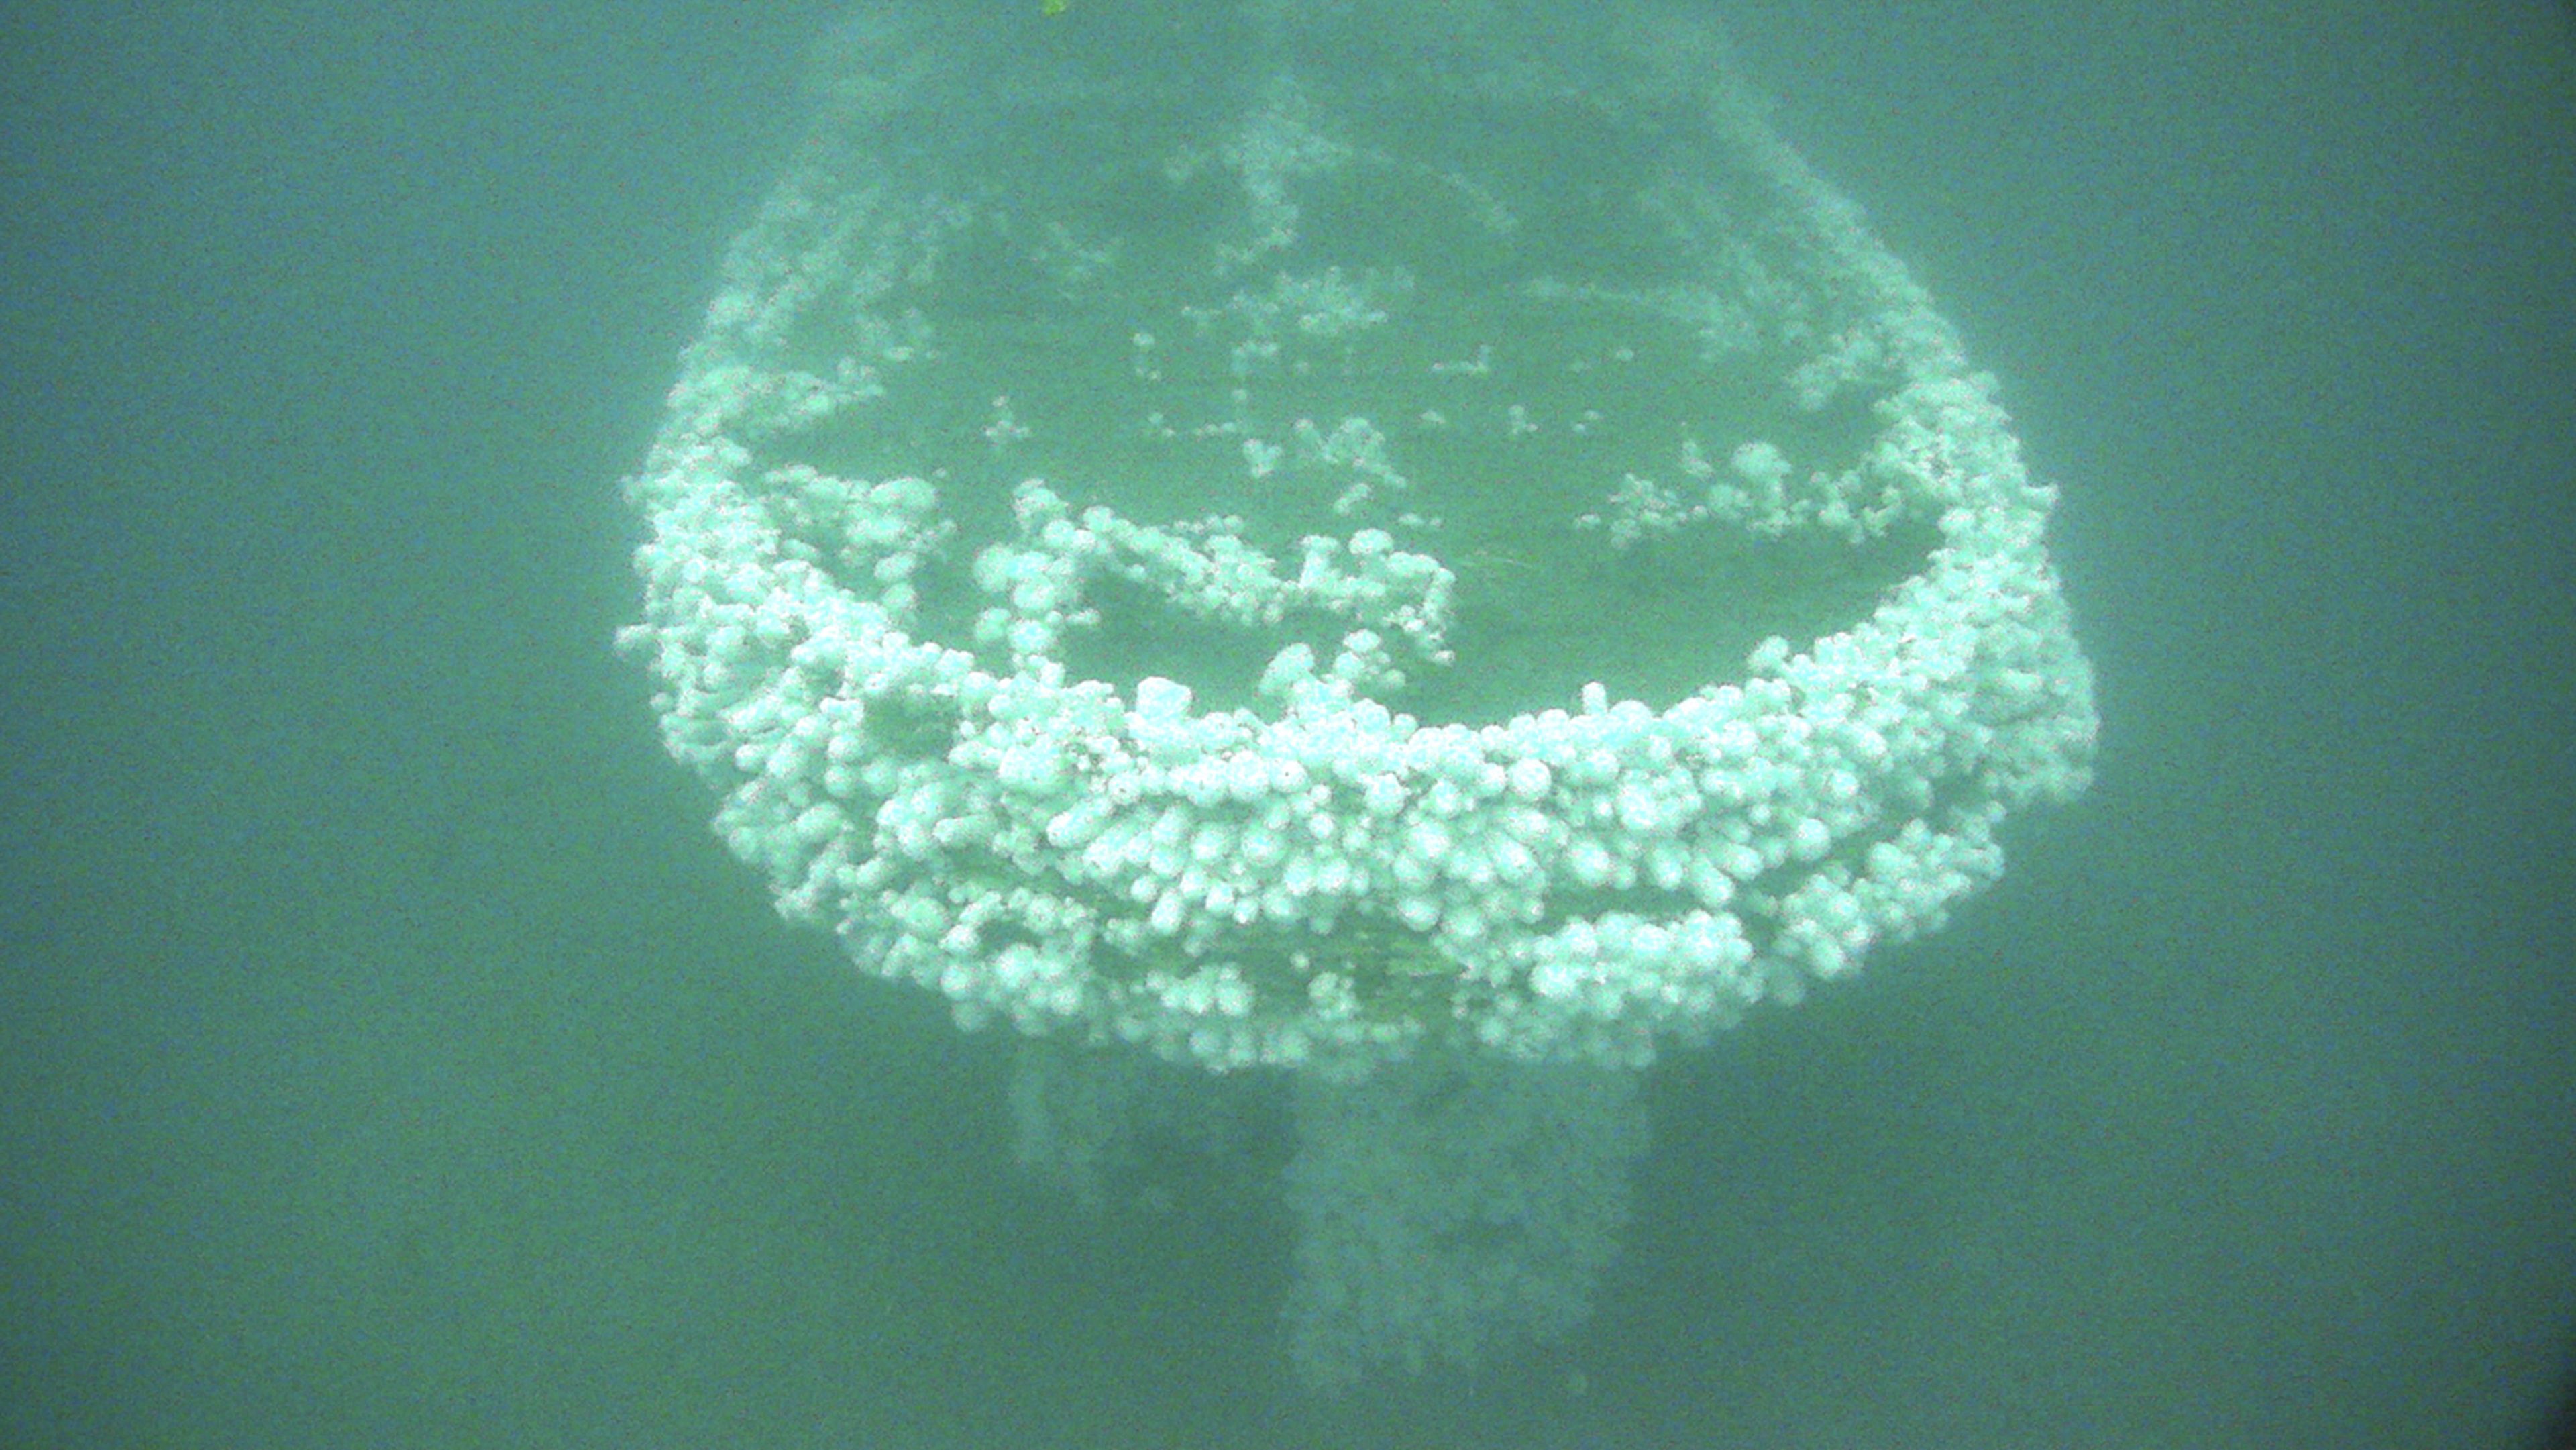 Stern view of the shipwreck USS Conestoga colonized with white plumose sea anemones.